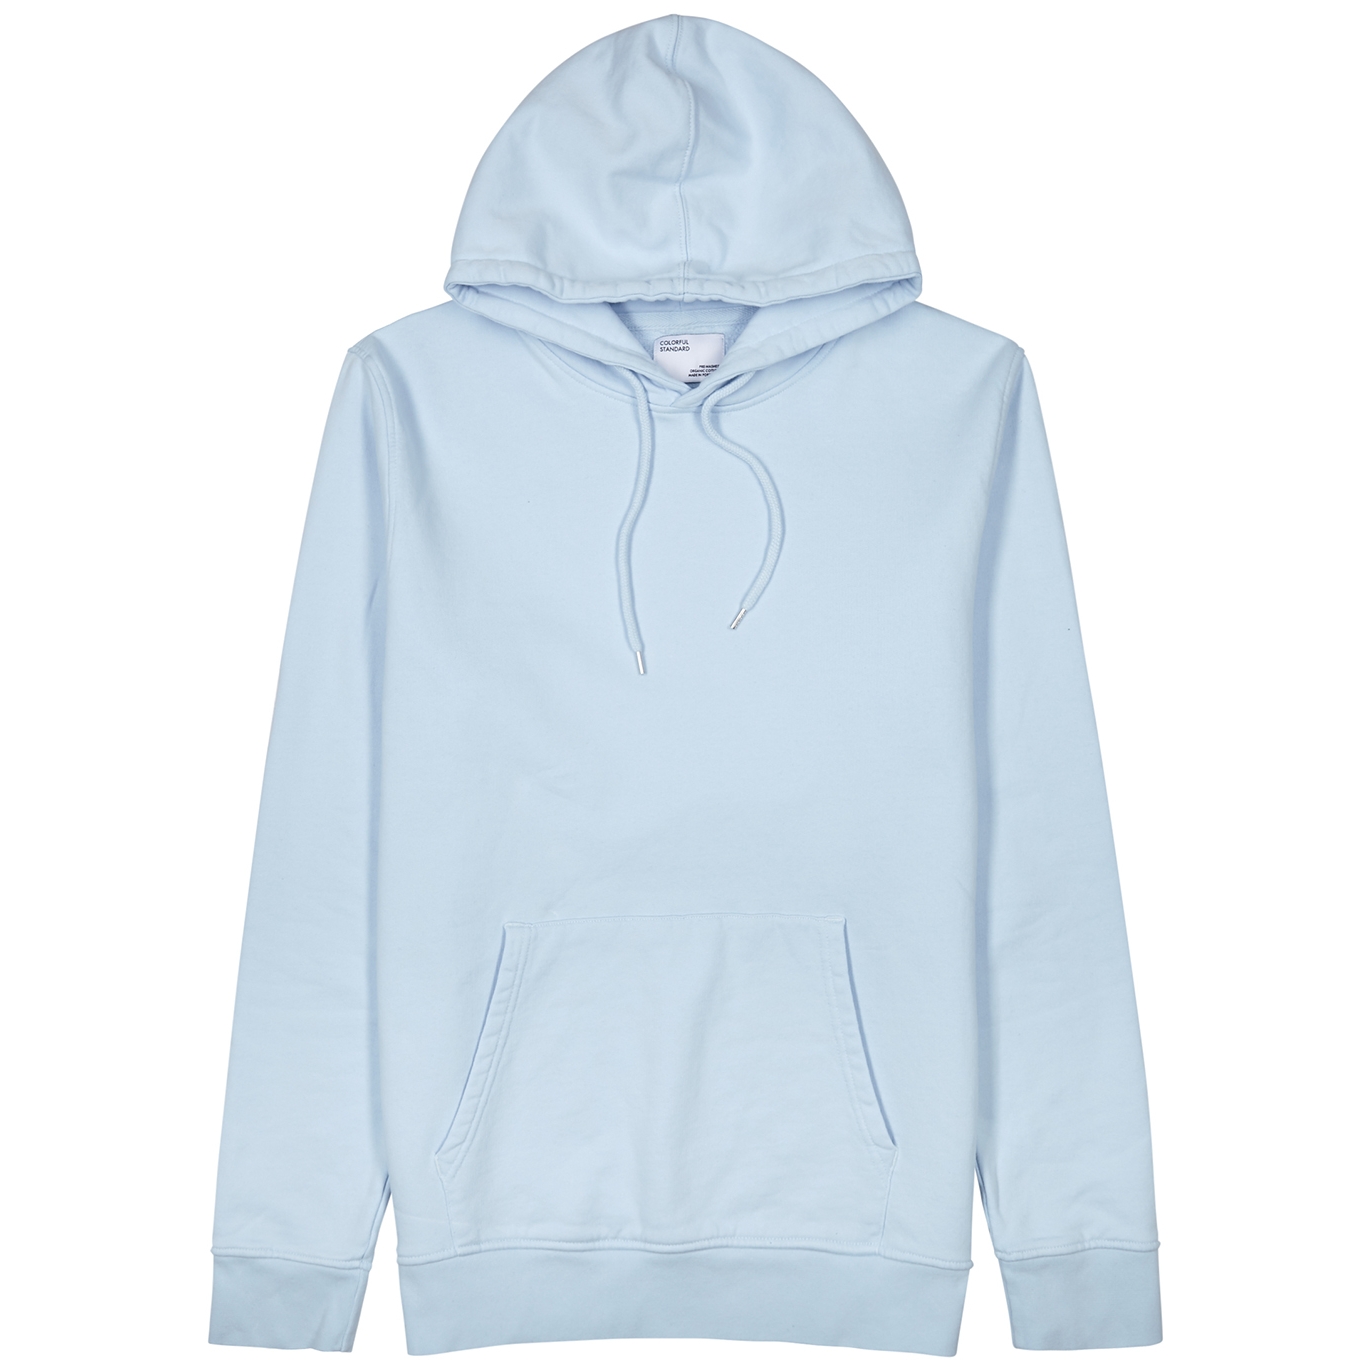 Colorful Standard Light Blue Hooded Cotton Sweatshirt